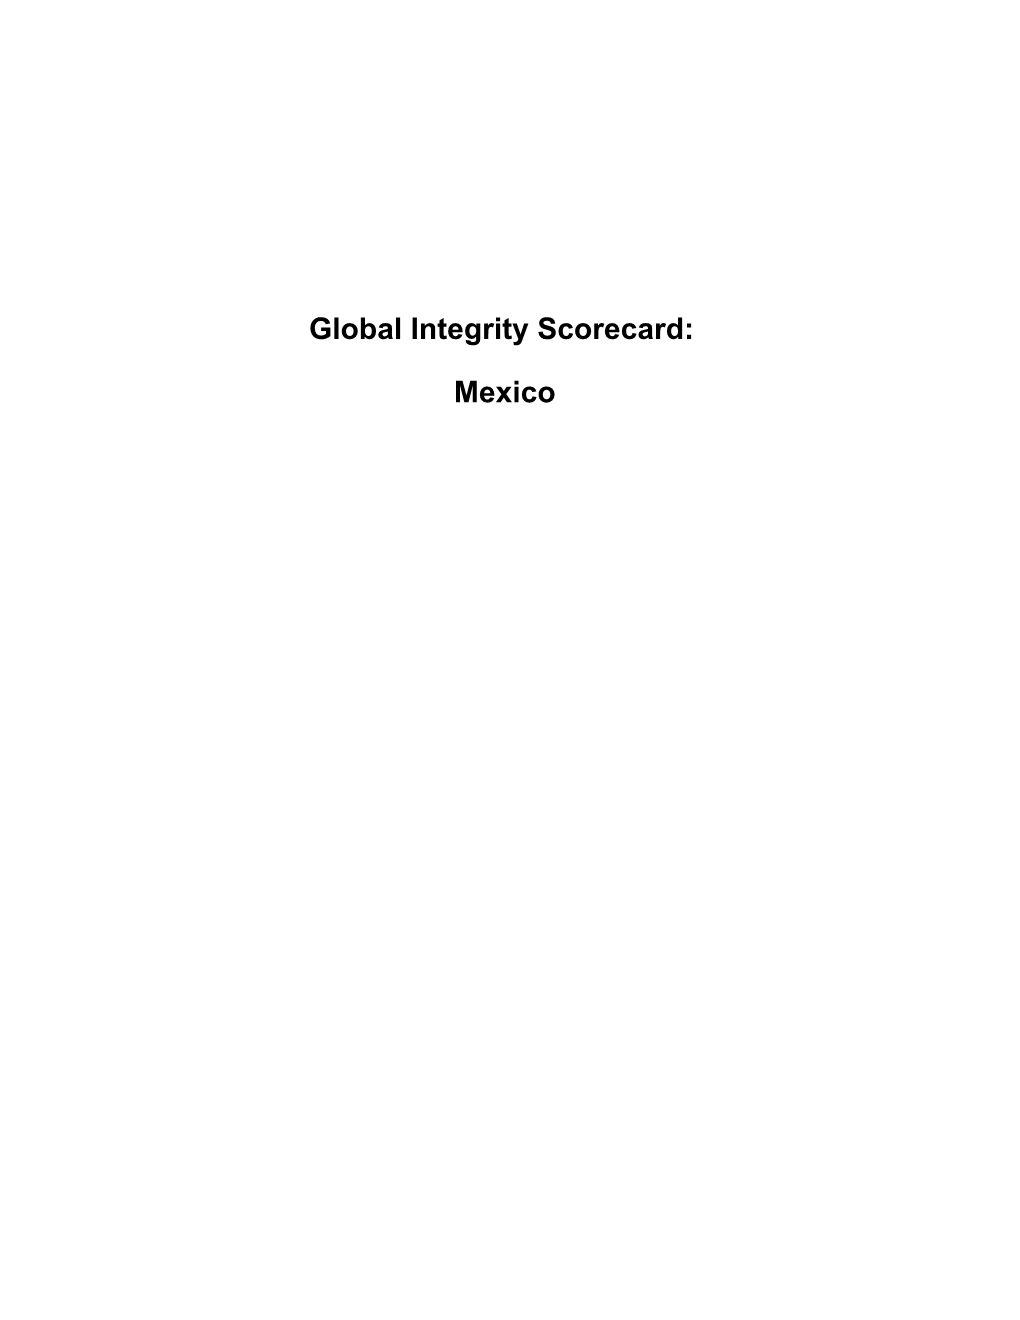 Global Integrity Scorecard: Mexico